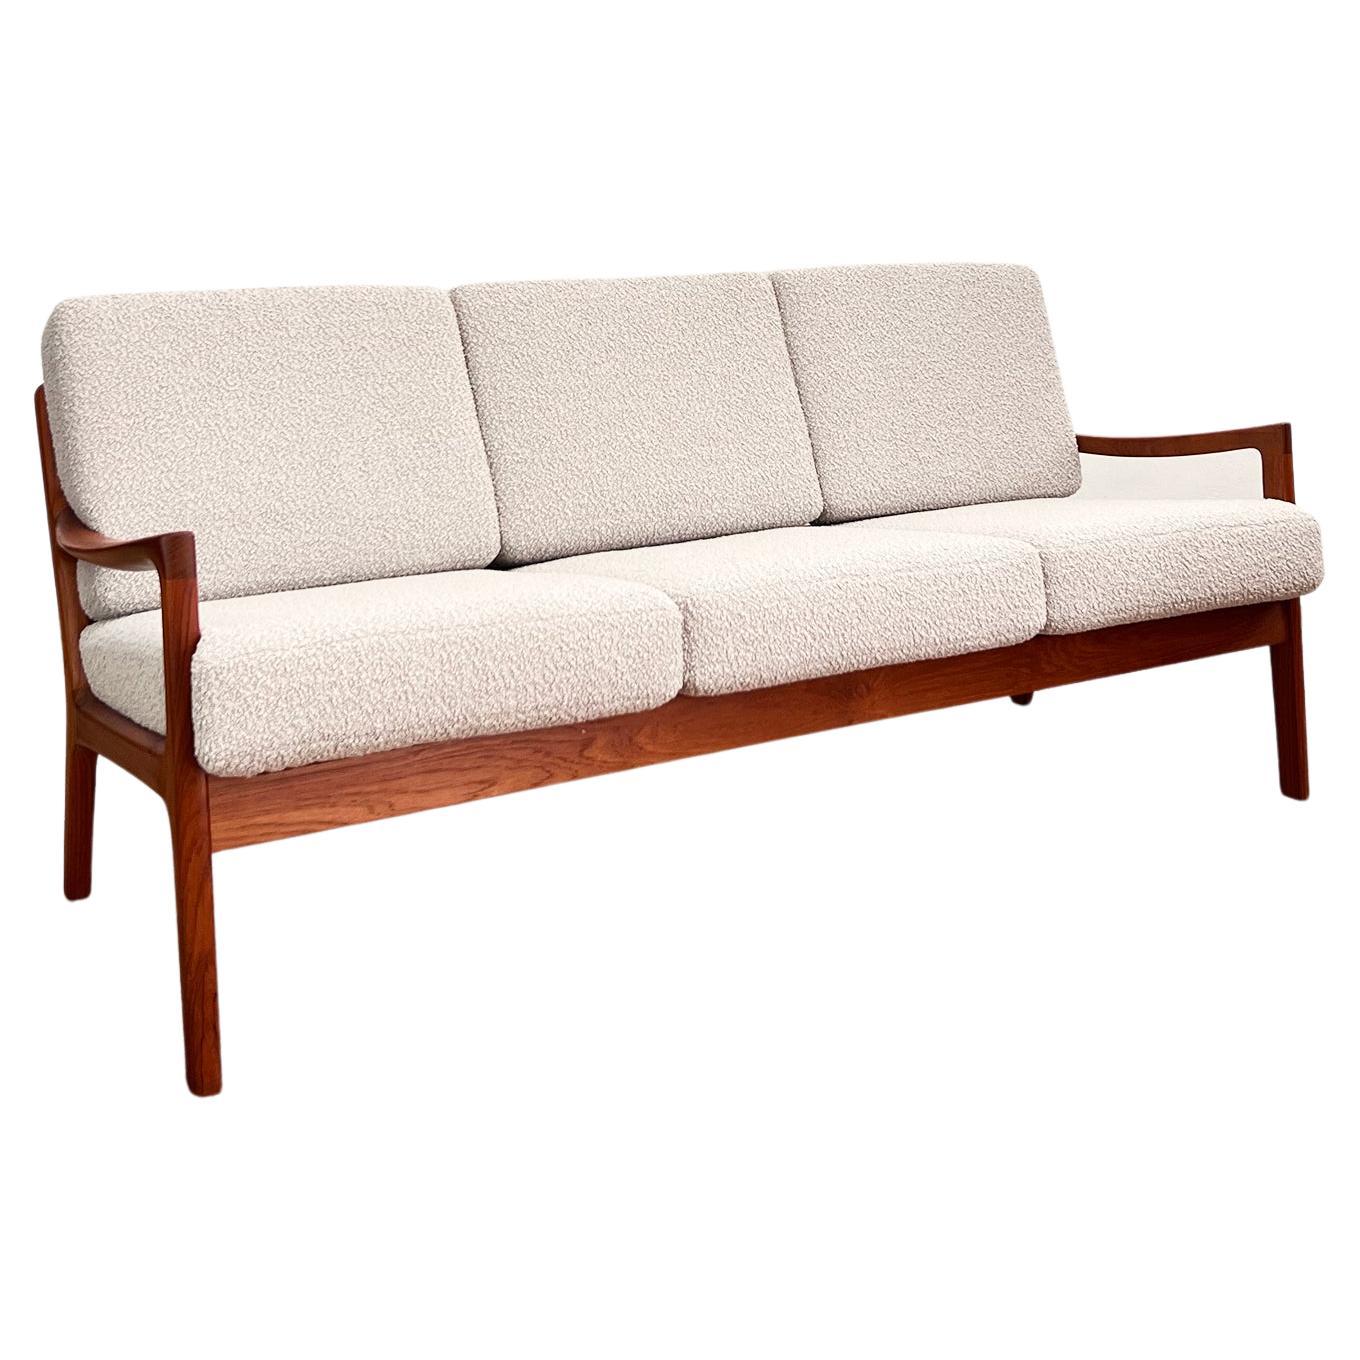 Mid-Century Three Seat Sofa Senator, Danish Design Teak Couch by Ole Wanscher